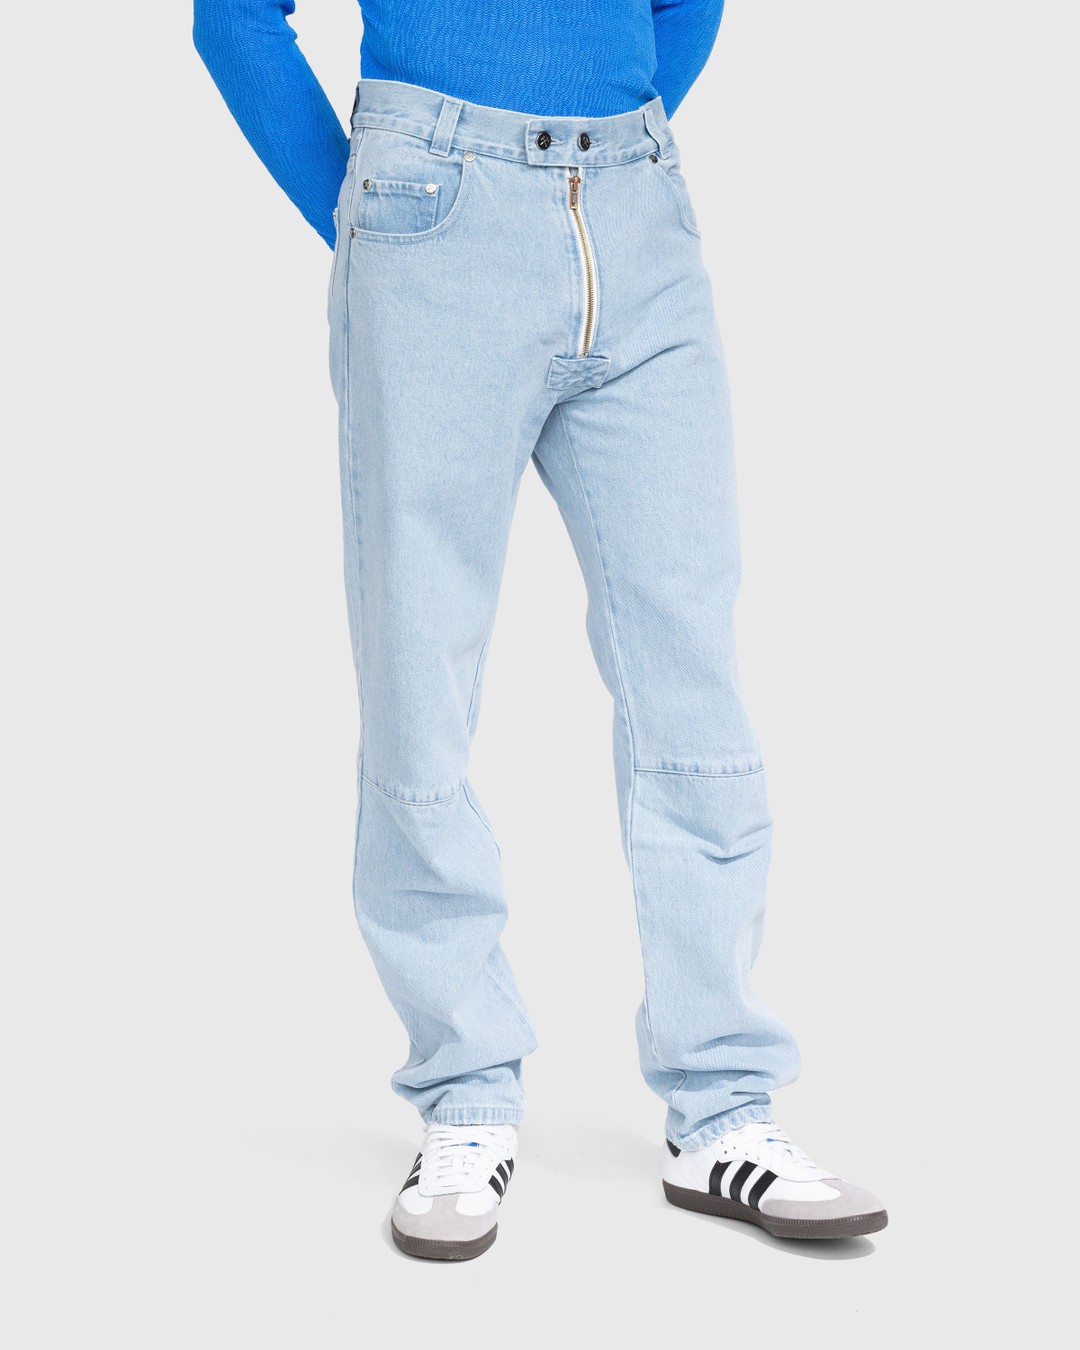 GmbH – Darveesh Denim Trousers Light Indigo Blue - Pants - Blue - Image 2